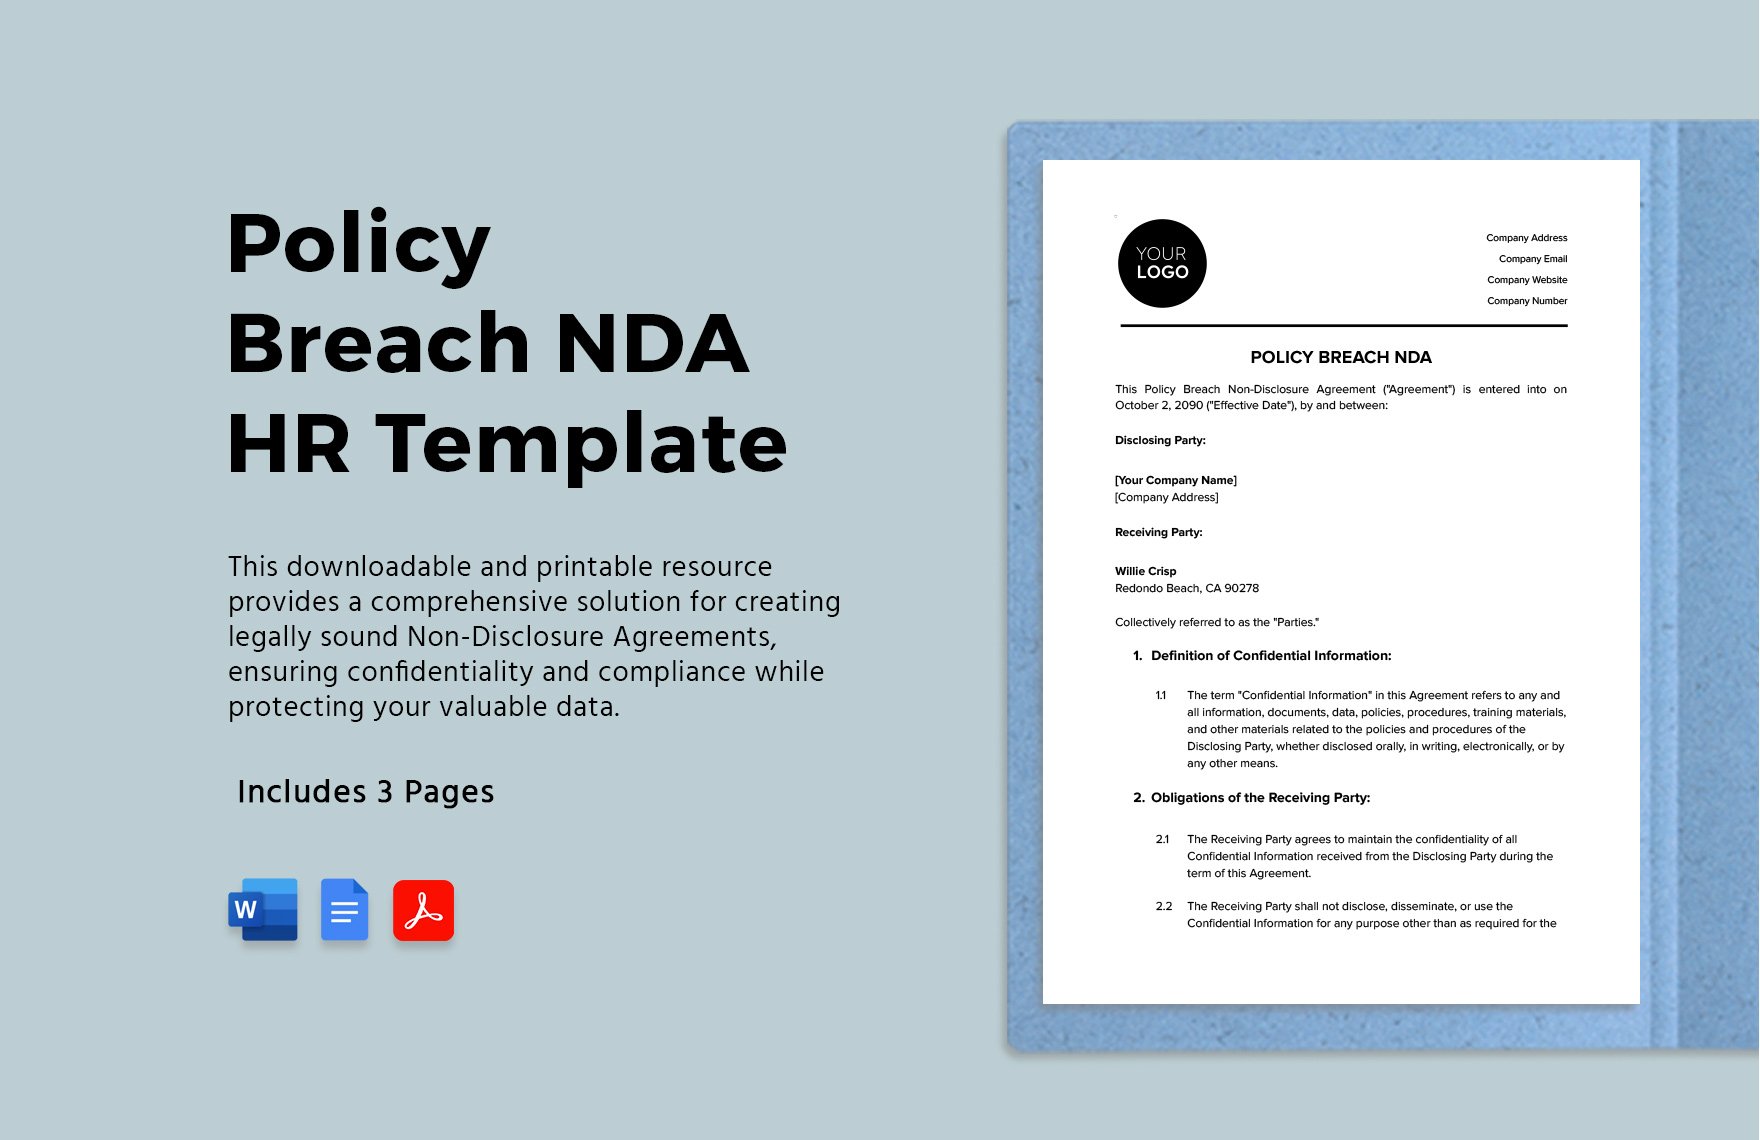 Policy Breach NDA HR Template